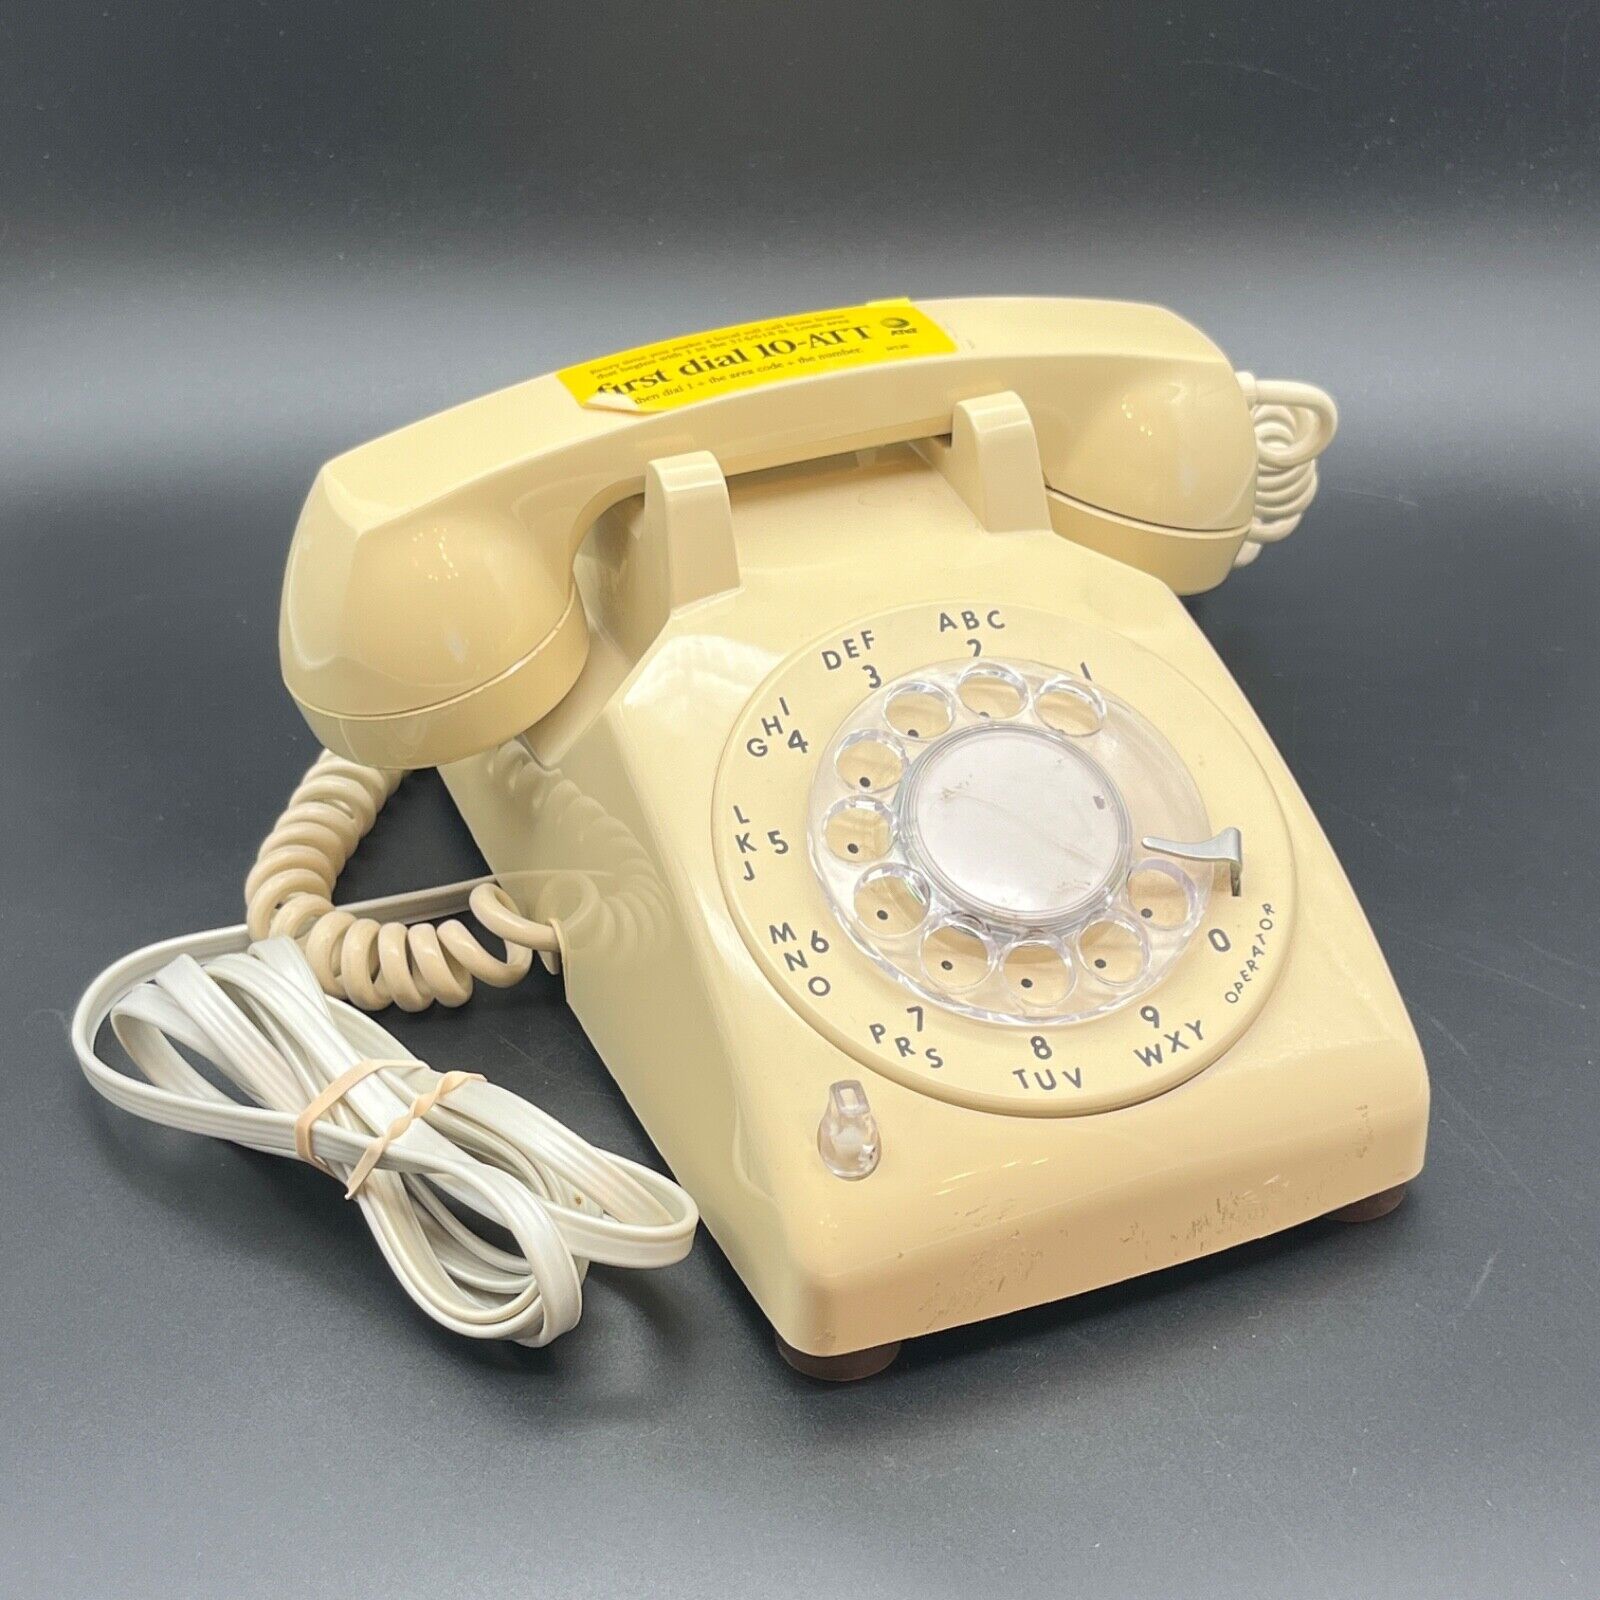 ITT Rotary Dial Desk Telephone Cream Beige 720011-106 500 Vintage Phone 1984